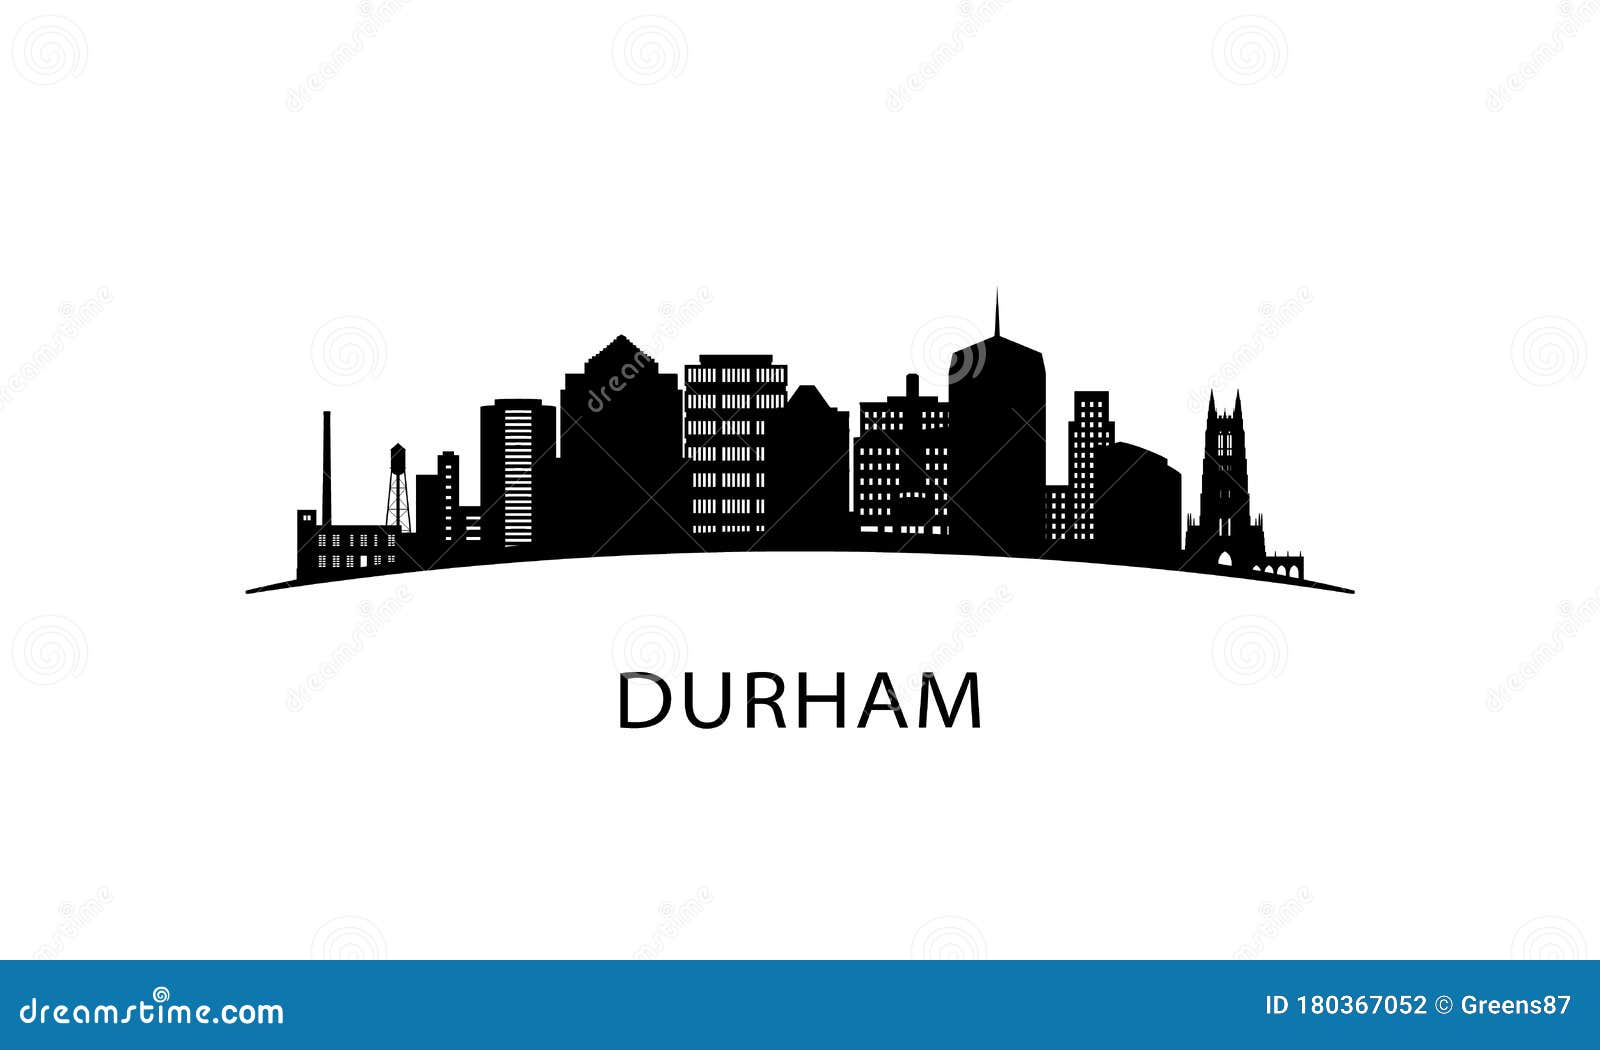 durham city skyline.